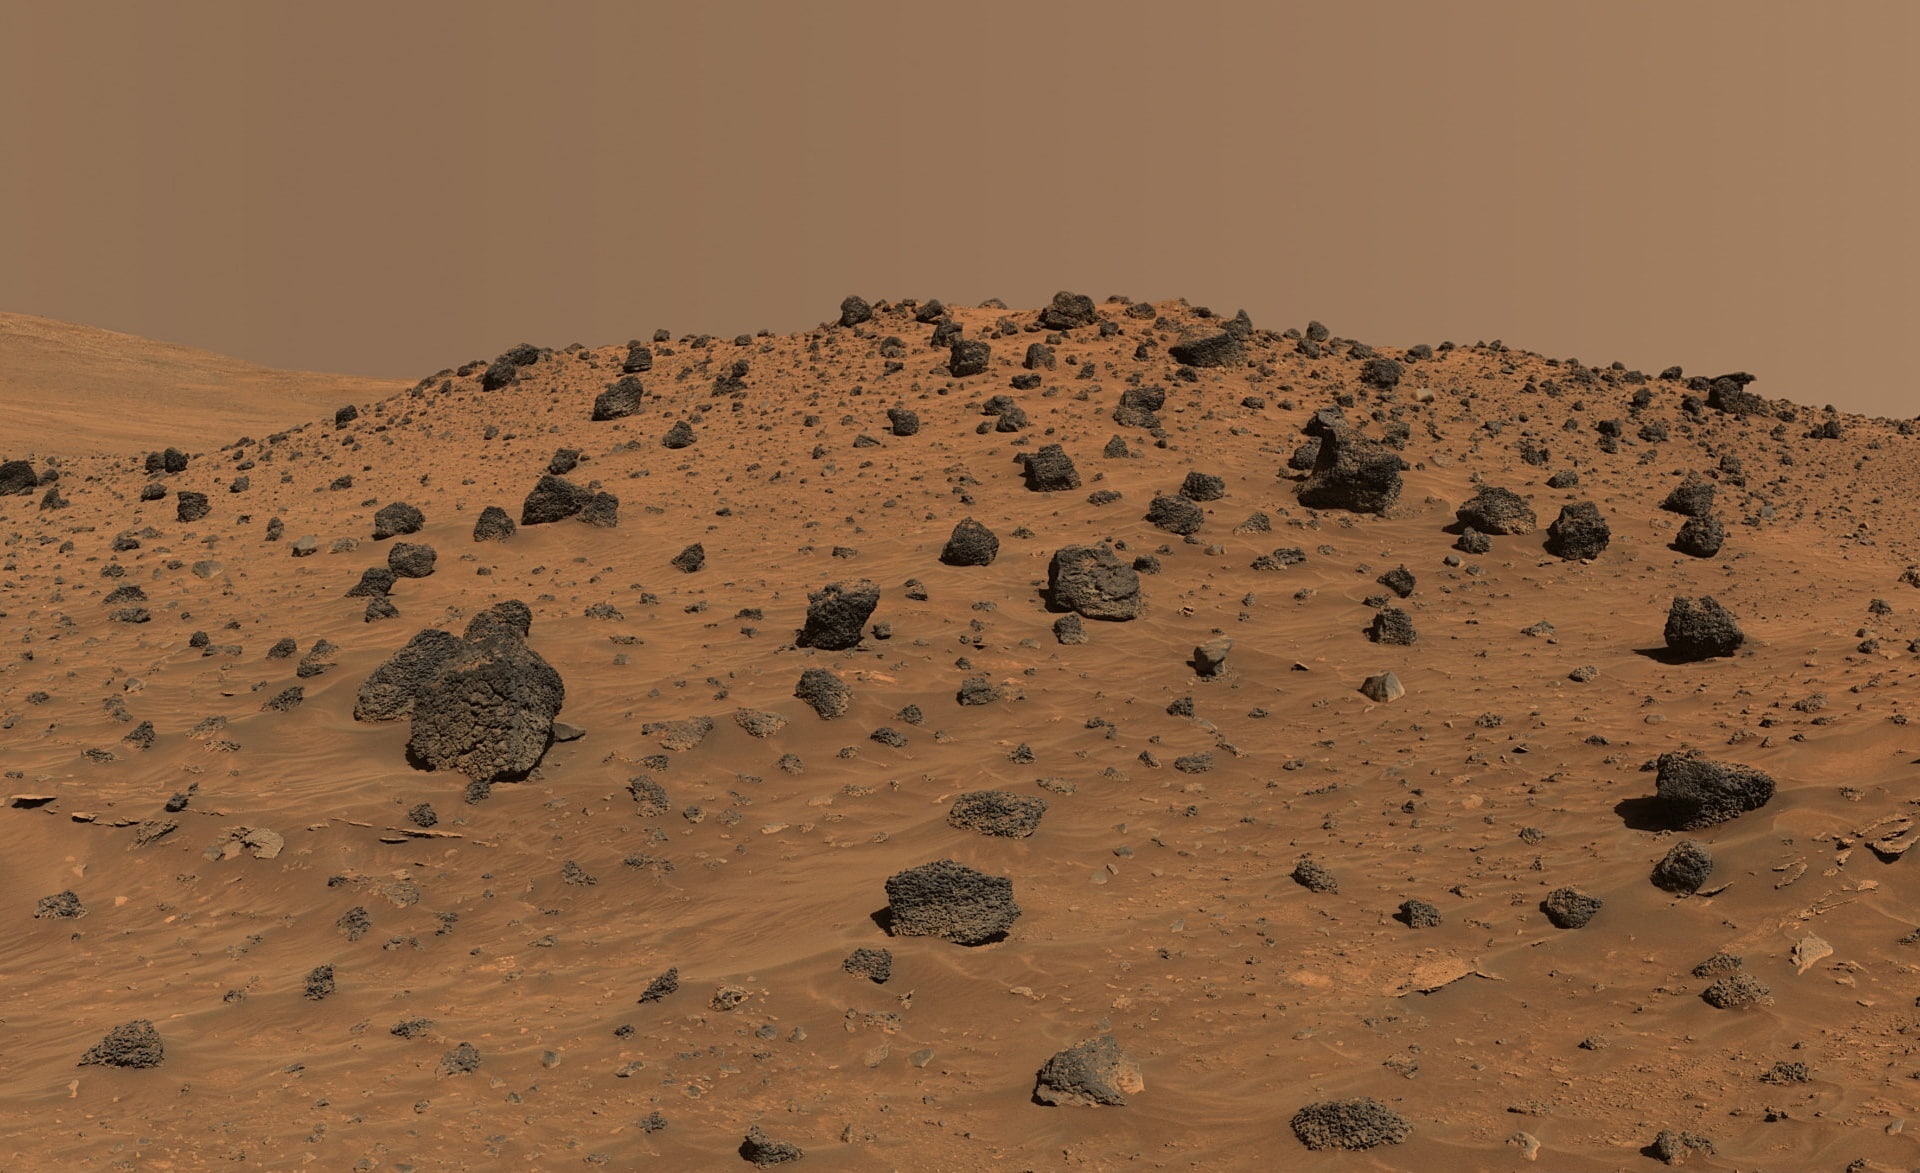 Mars Surface, desert land, Artistic, 3D, sky, scenics - nature